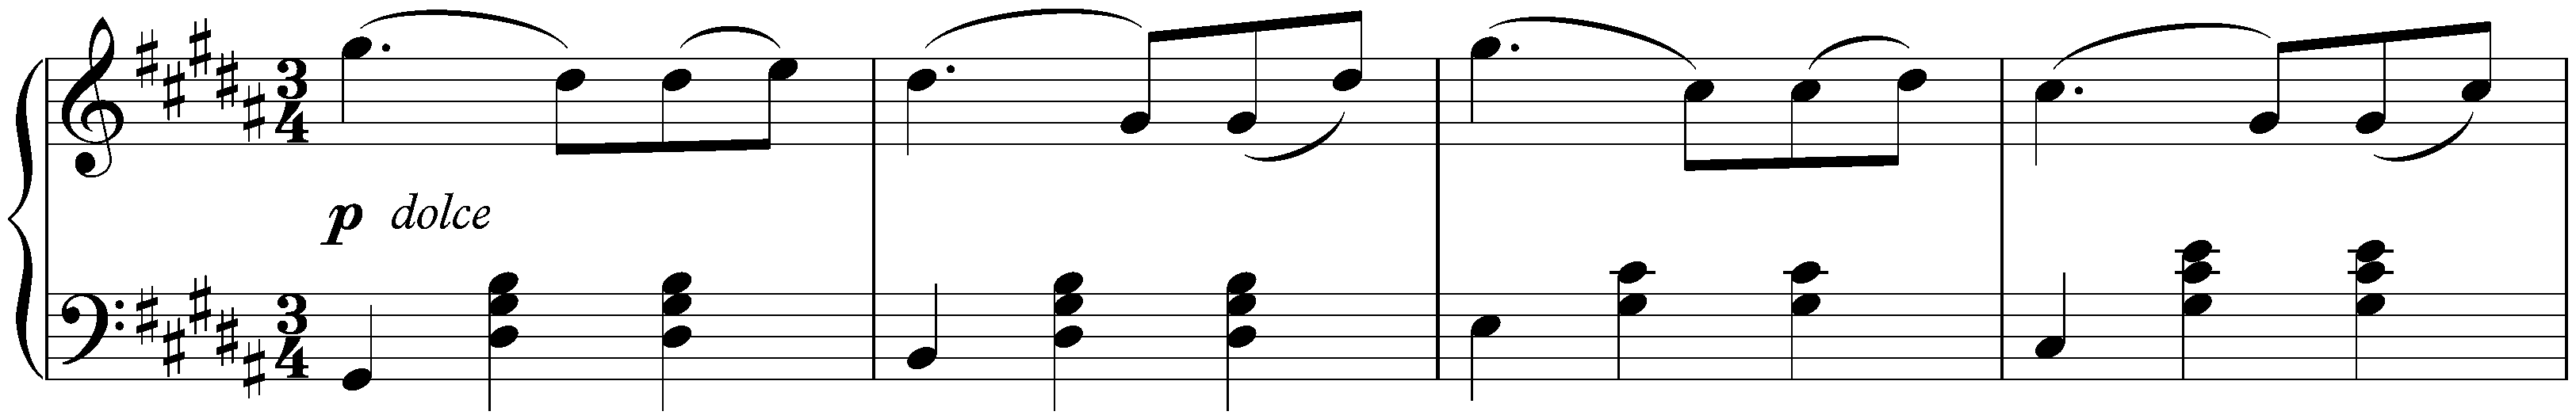 Sixteen Waltzes, op. 39; 3. G-sharp minor (simplified version)